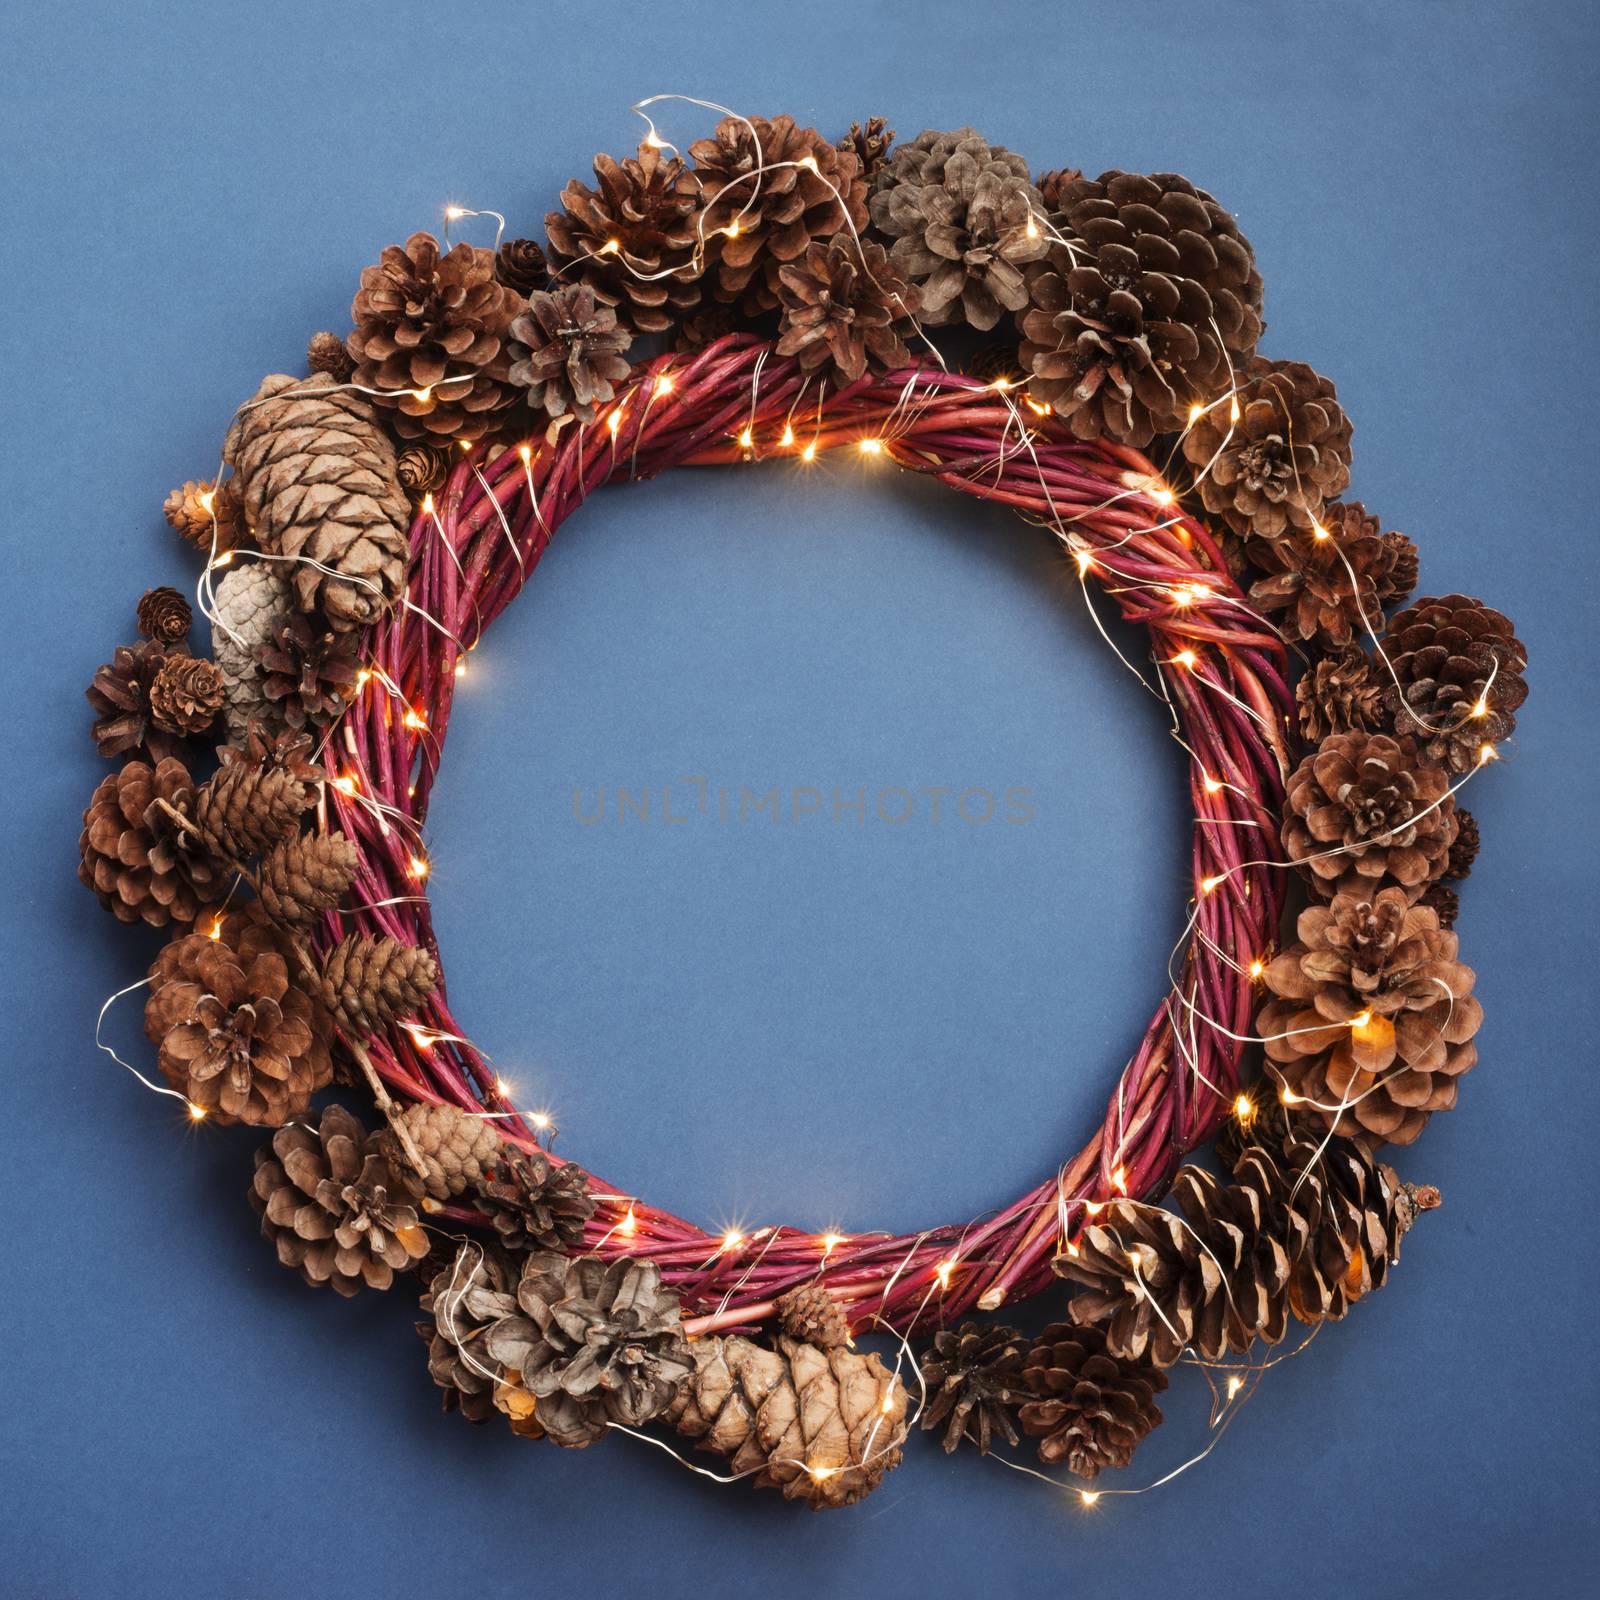 Christmas wreath background by destillat